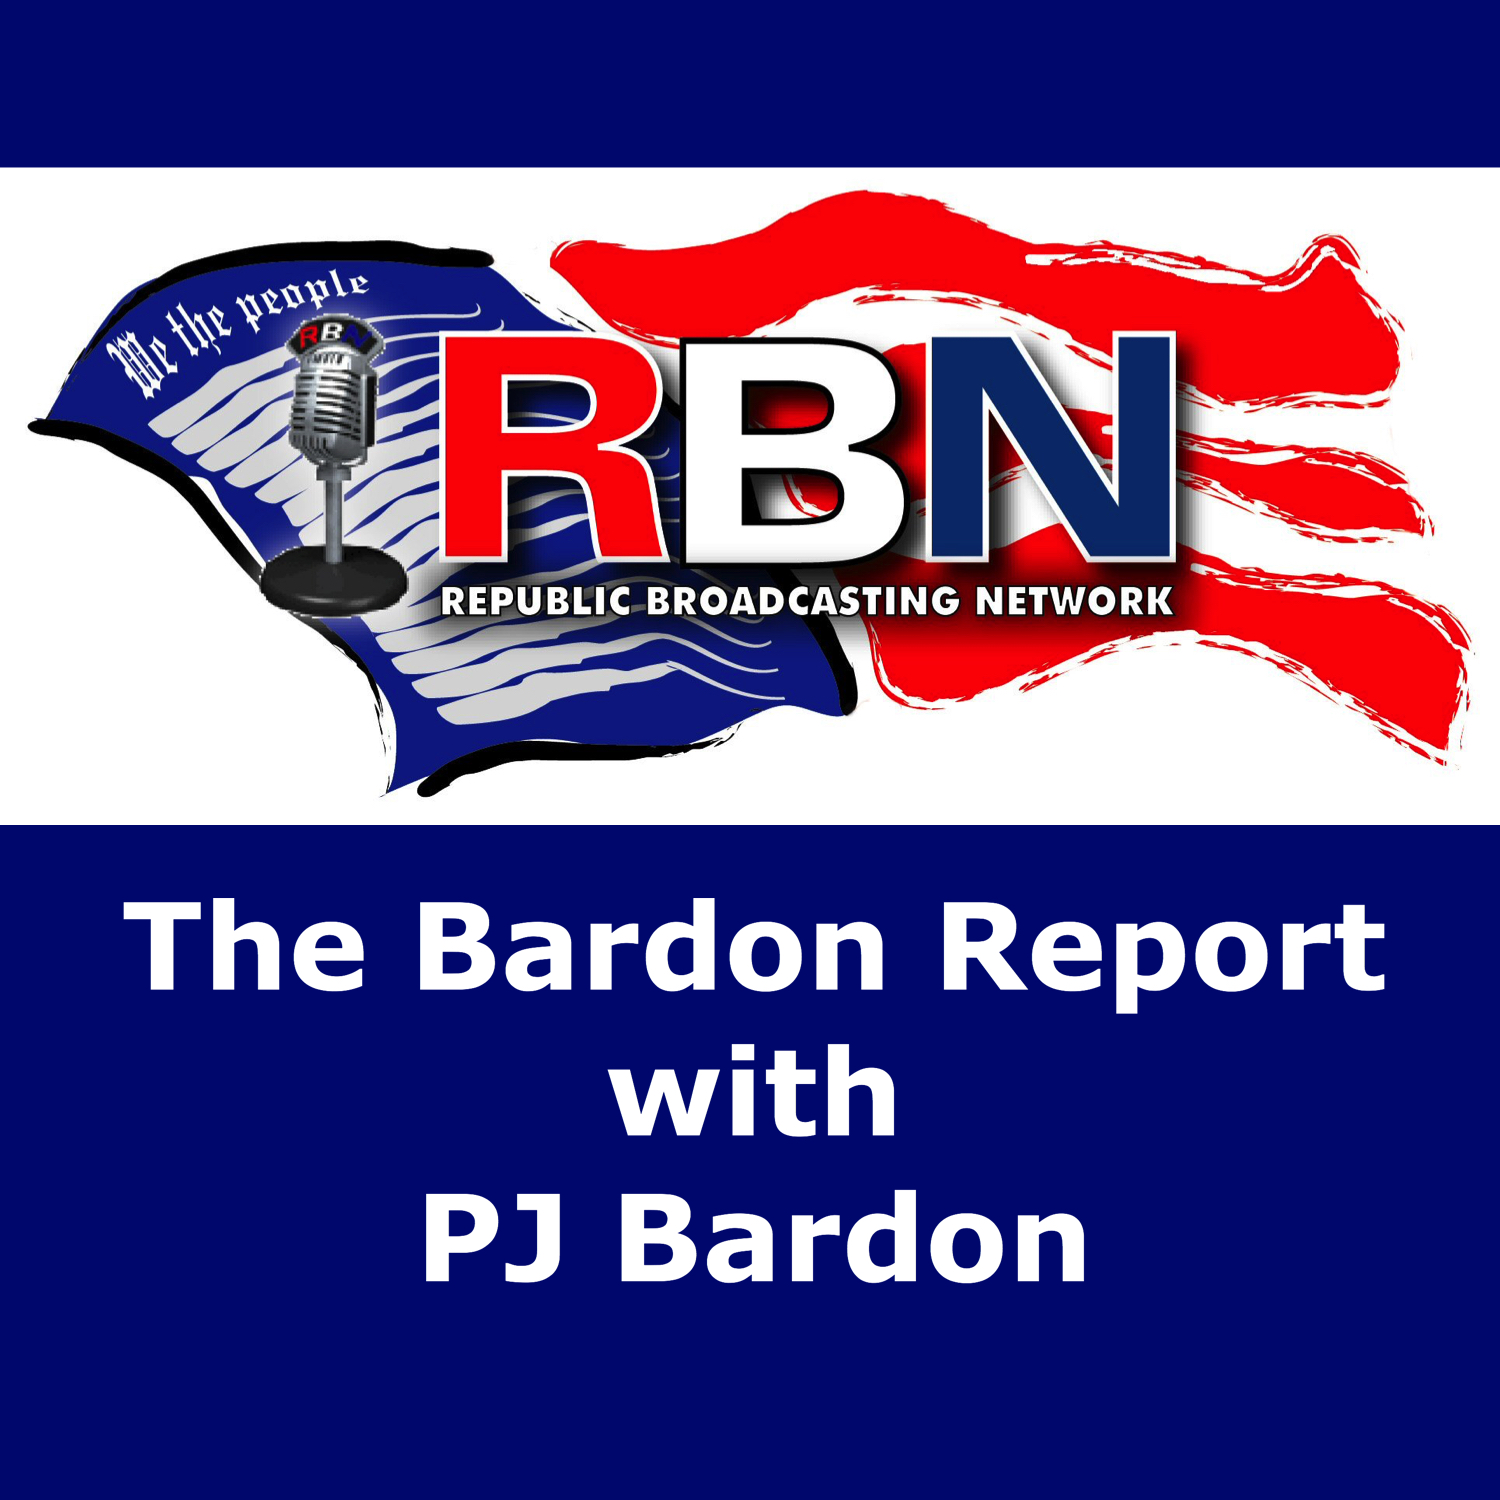 The Bardon Report